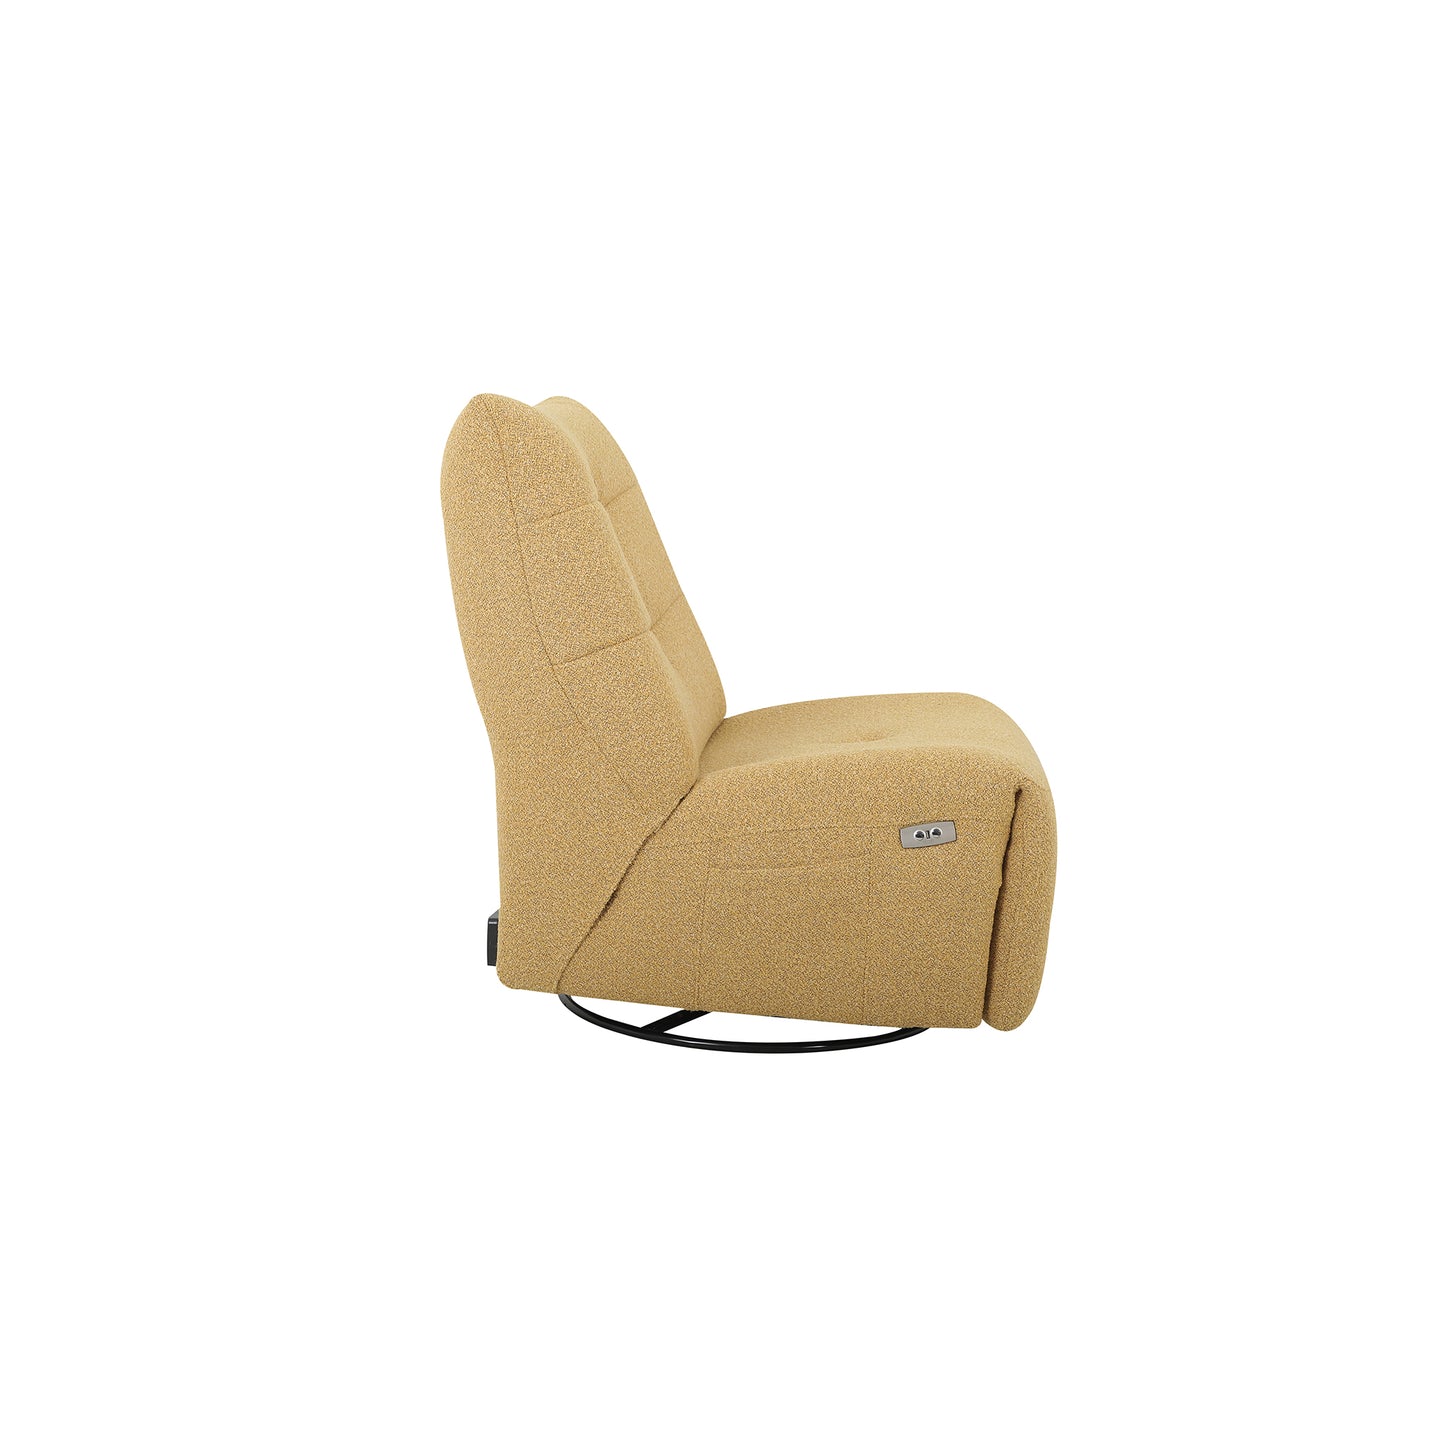 Wally Swivel Chair Rocker Recliner in Fabric or Leather - Custom Order